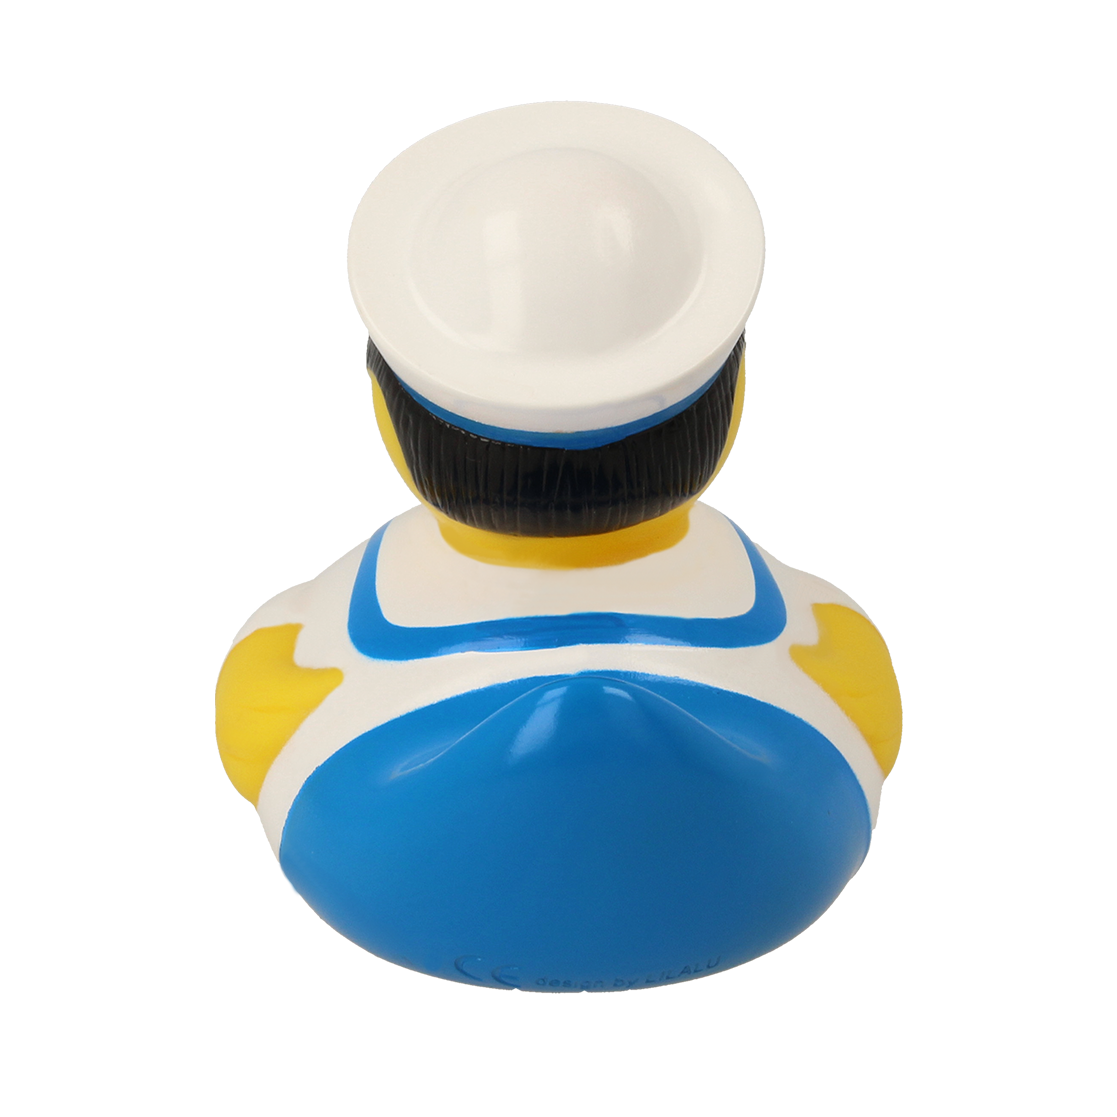 Sailor duck